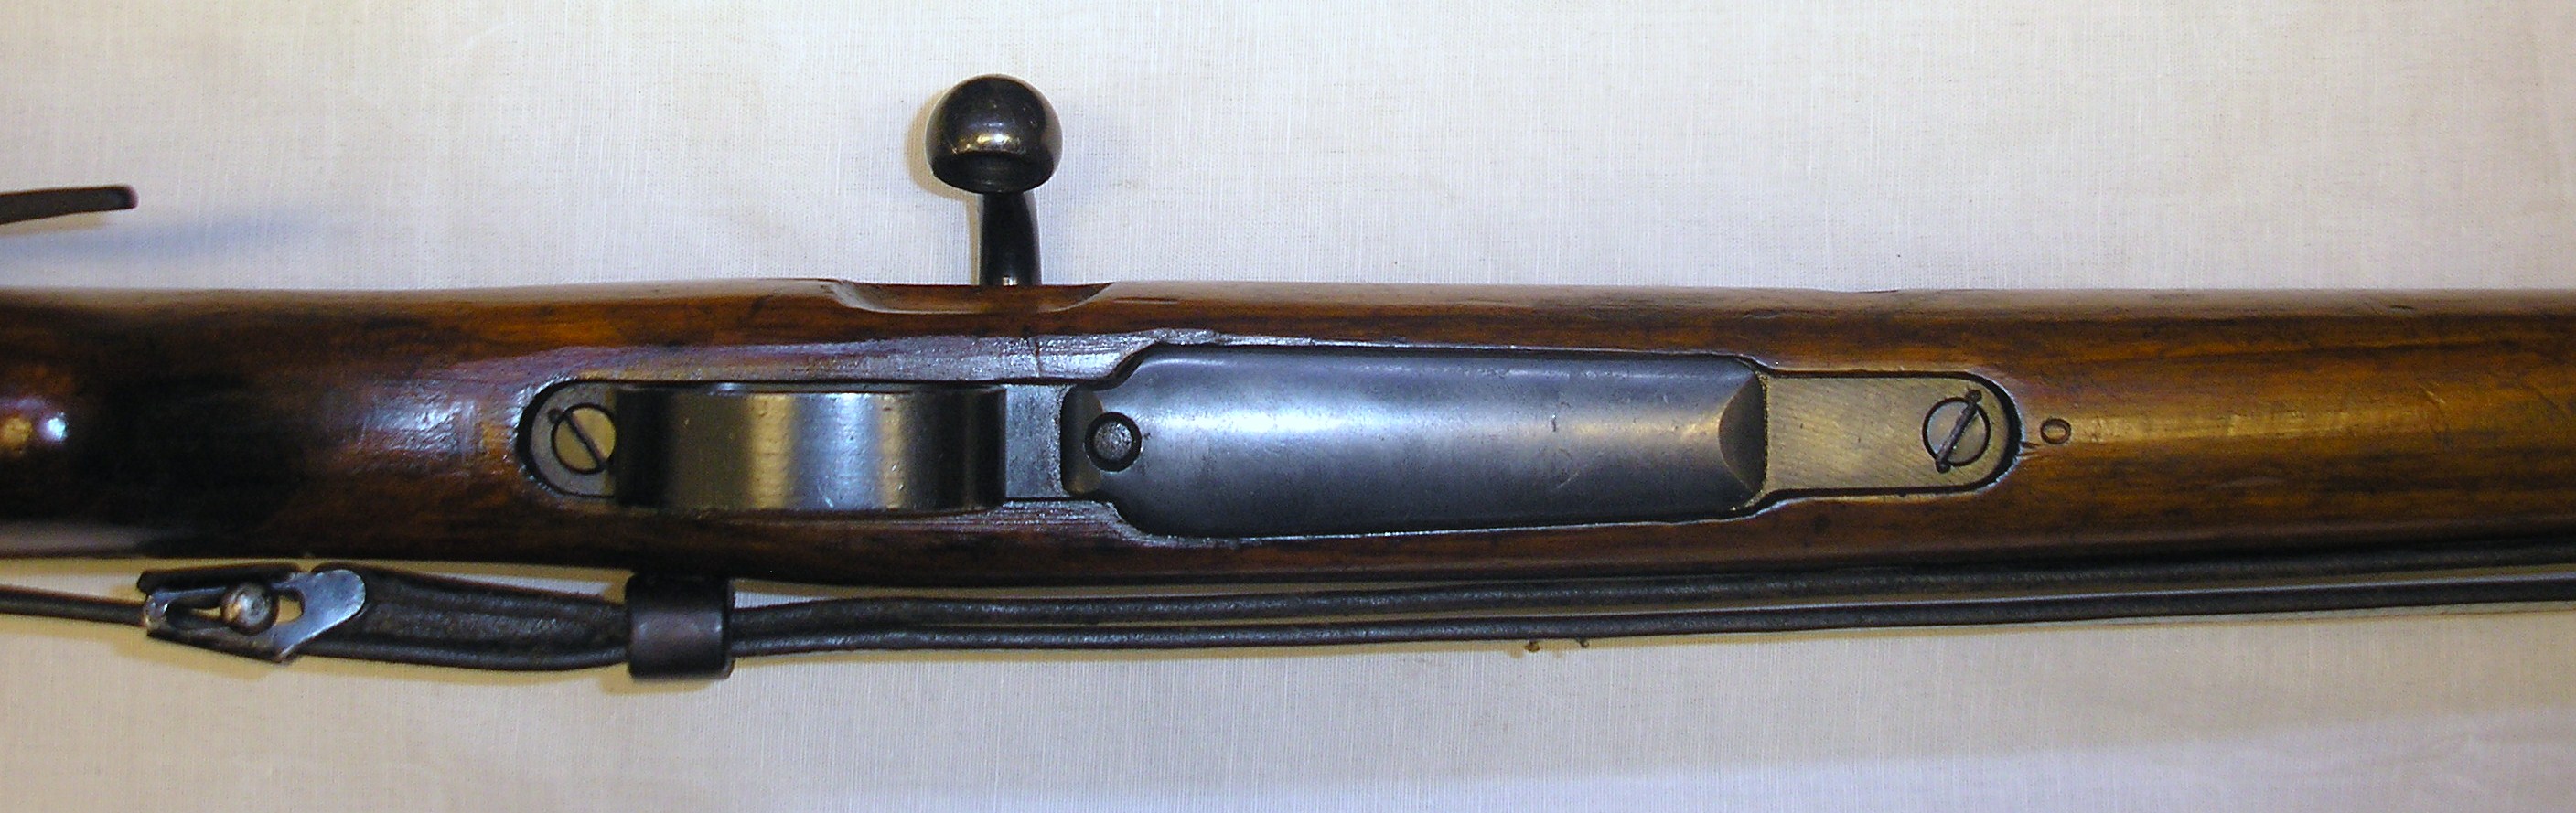 ./guns/rifle/bilder/Rifle-Kongsberg-Mauser-G3340-POLITI-1649-4.JPG